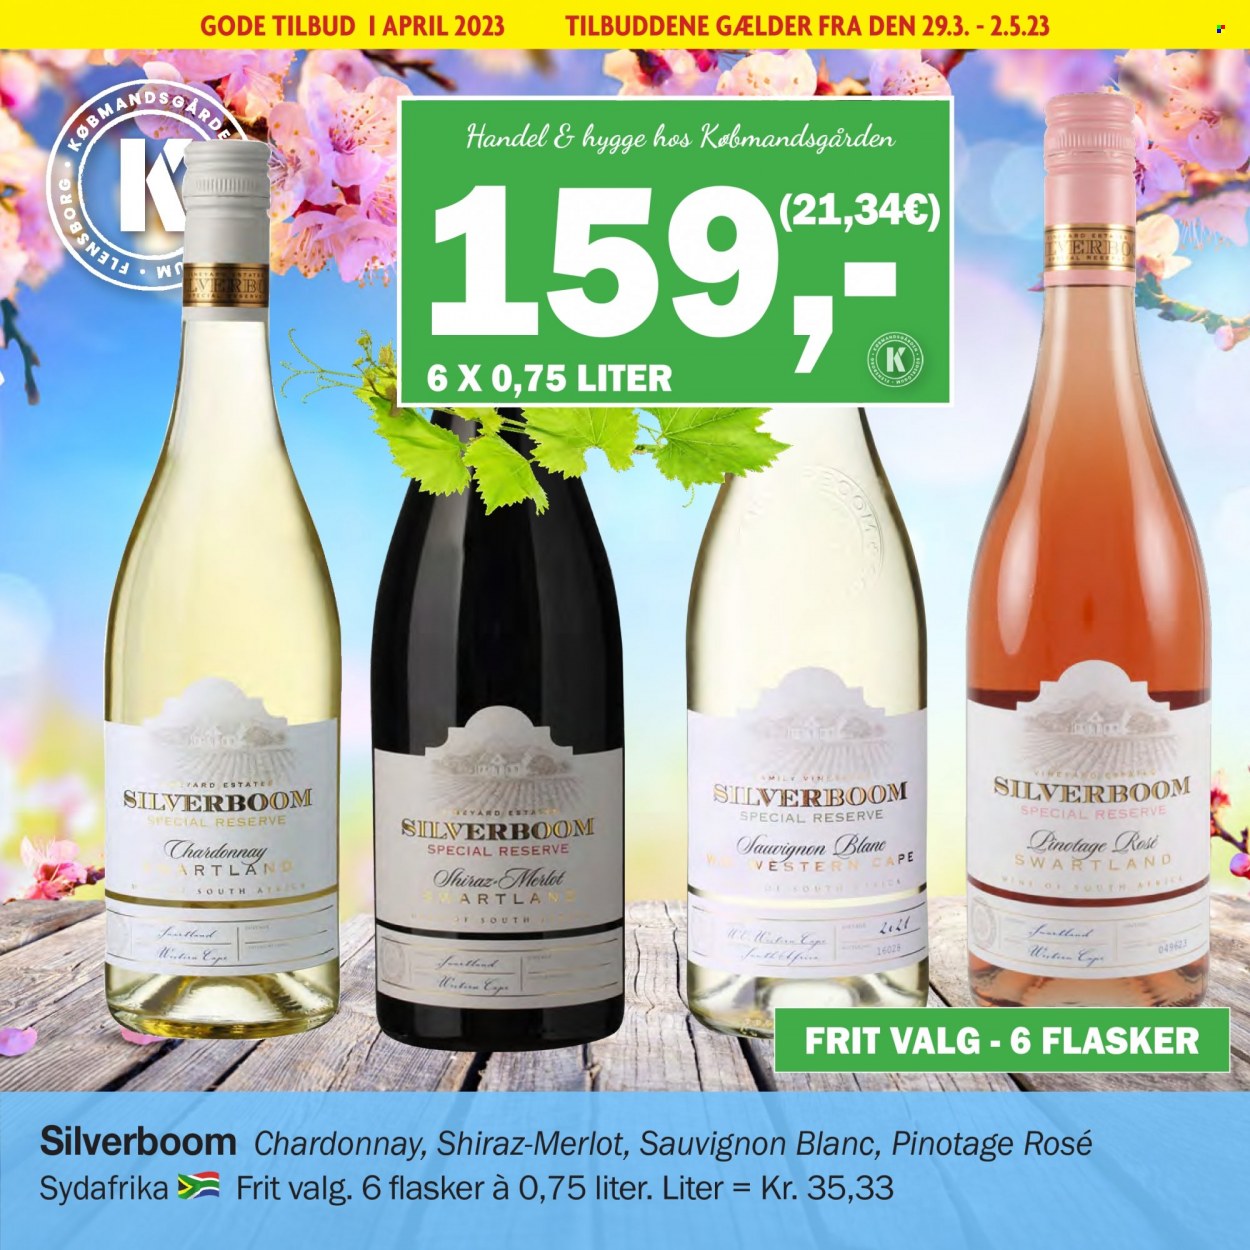 thumbnail - Købmandsgården tilbud  - 29.3.2023 - 2.5.2023 - tilbudsprodukter - Merlot, Shiraz, Chardonnay, Sauvignon Blanc, vin. Side 29.